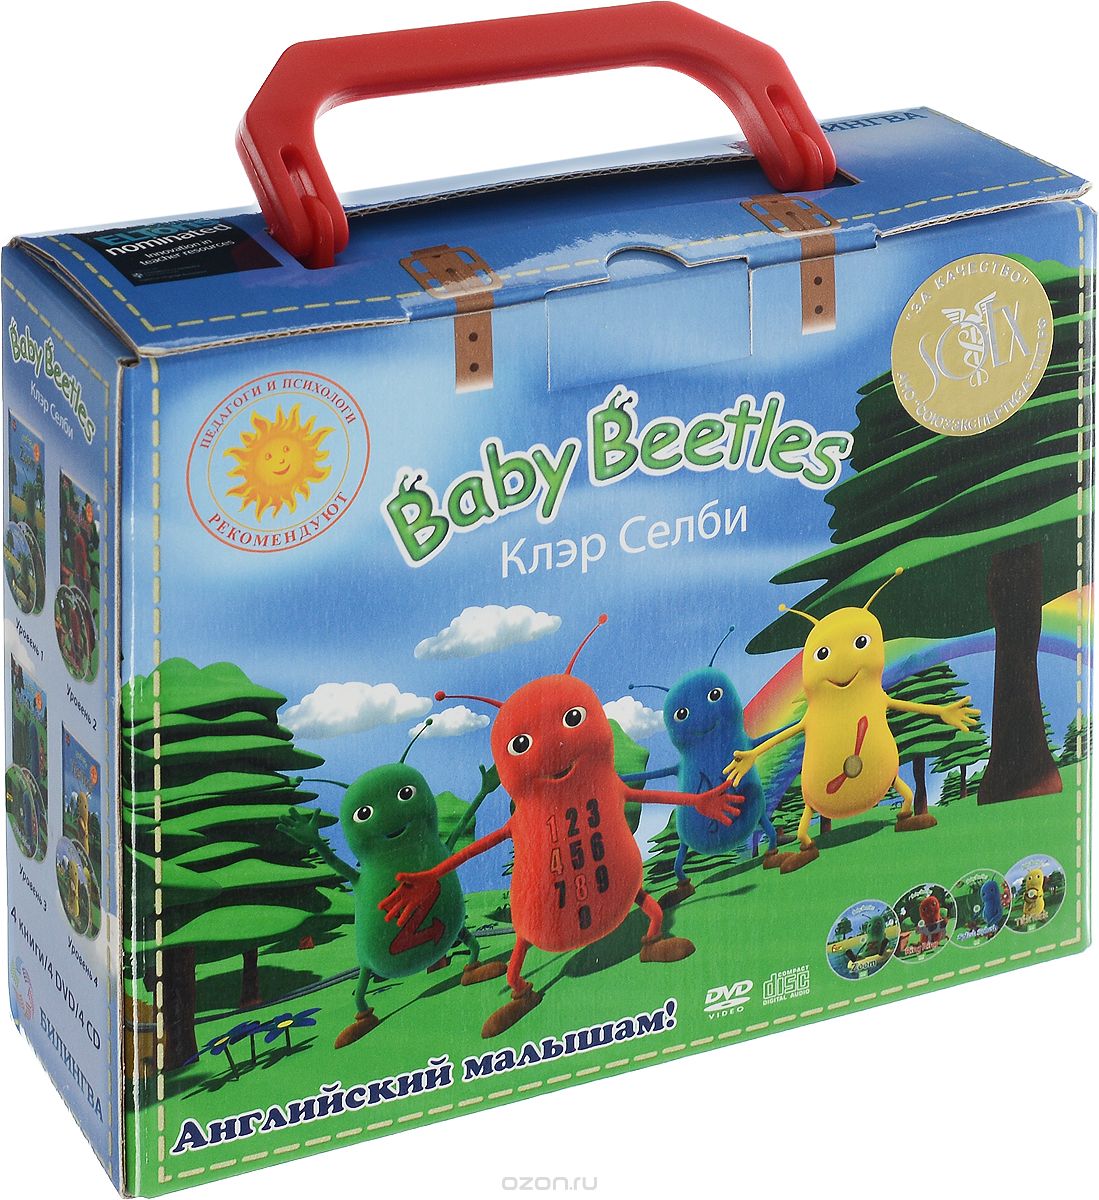 Скачать книгу "Baby Beetles (комплект из 4 книг + 4 DVD-ROM и 4 CD), Клэр Селби"